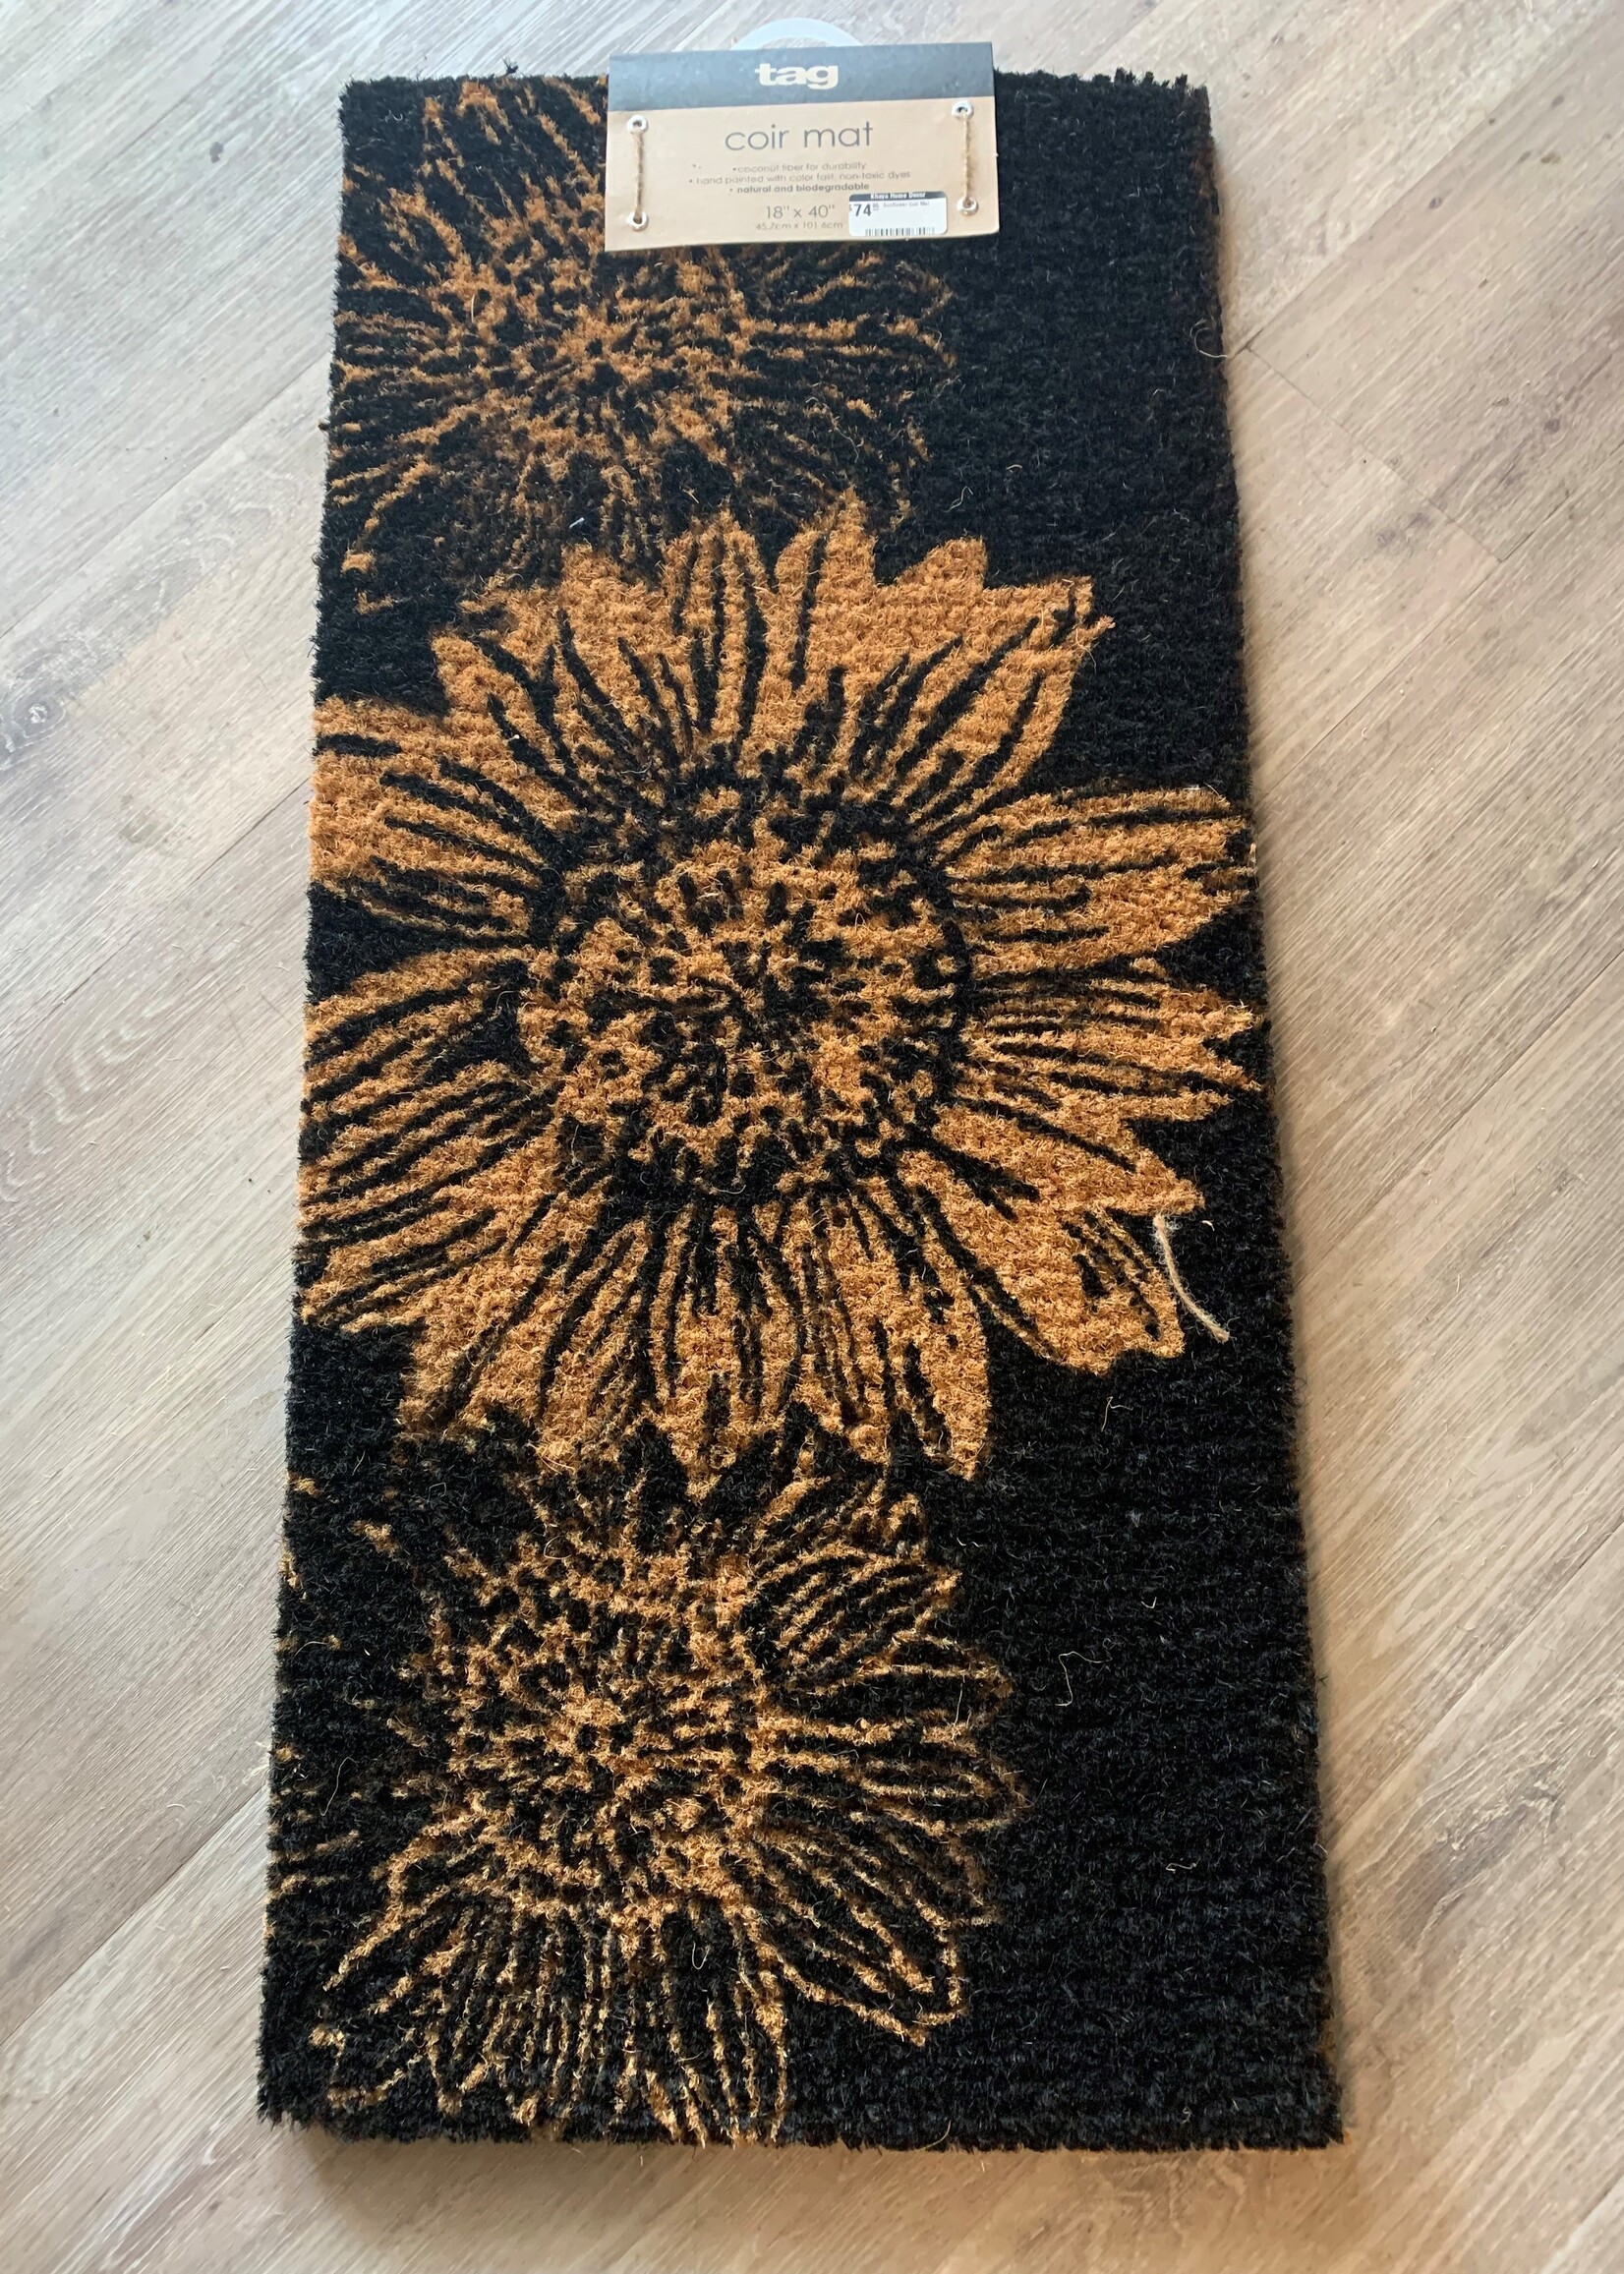 Tag Sunflower Coir Mat